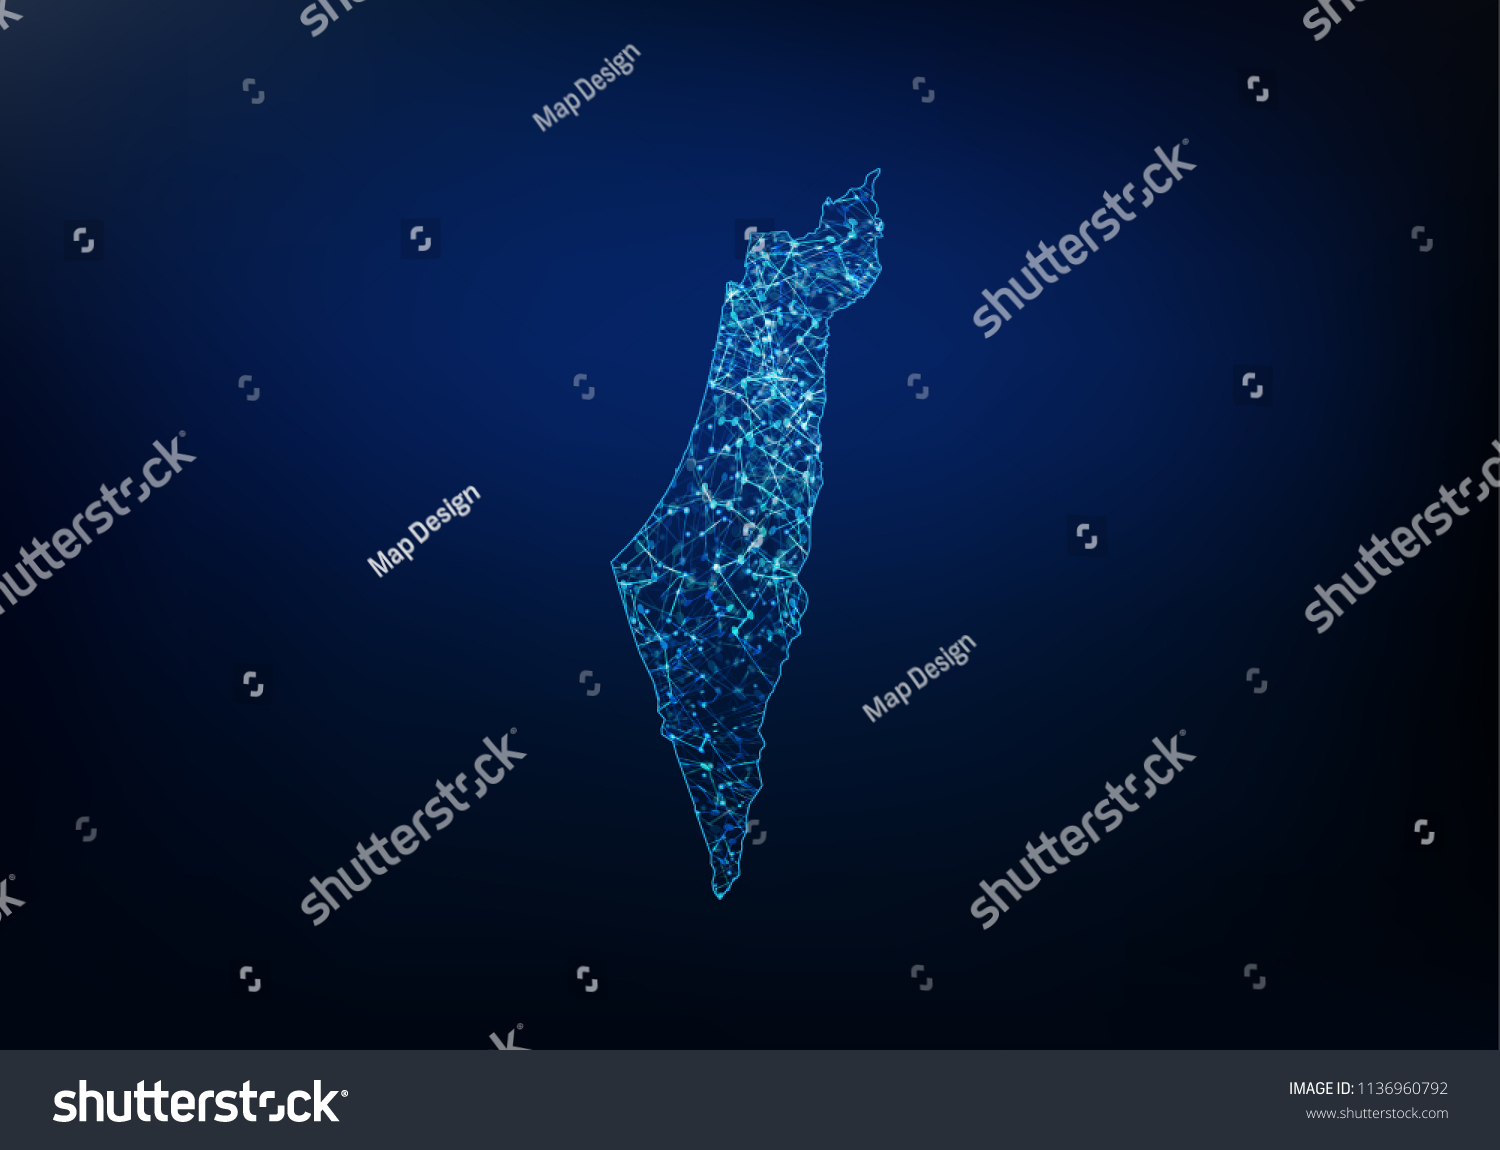 1,162 Digital israel map Images, Stock Photos & Vectors | Shutterstock